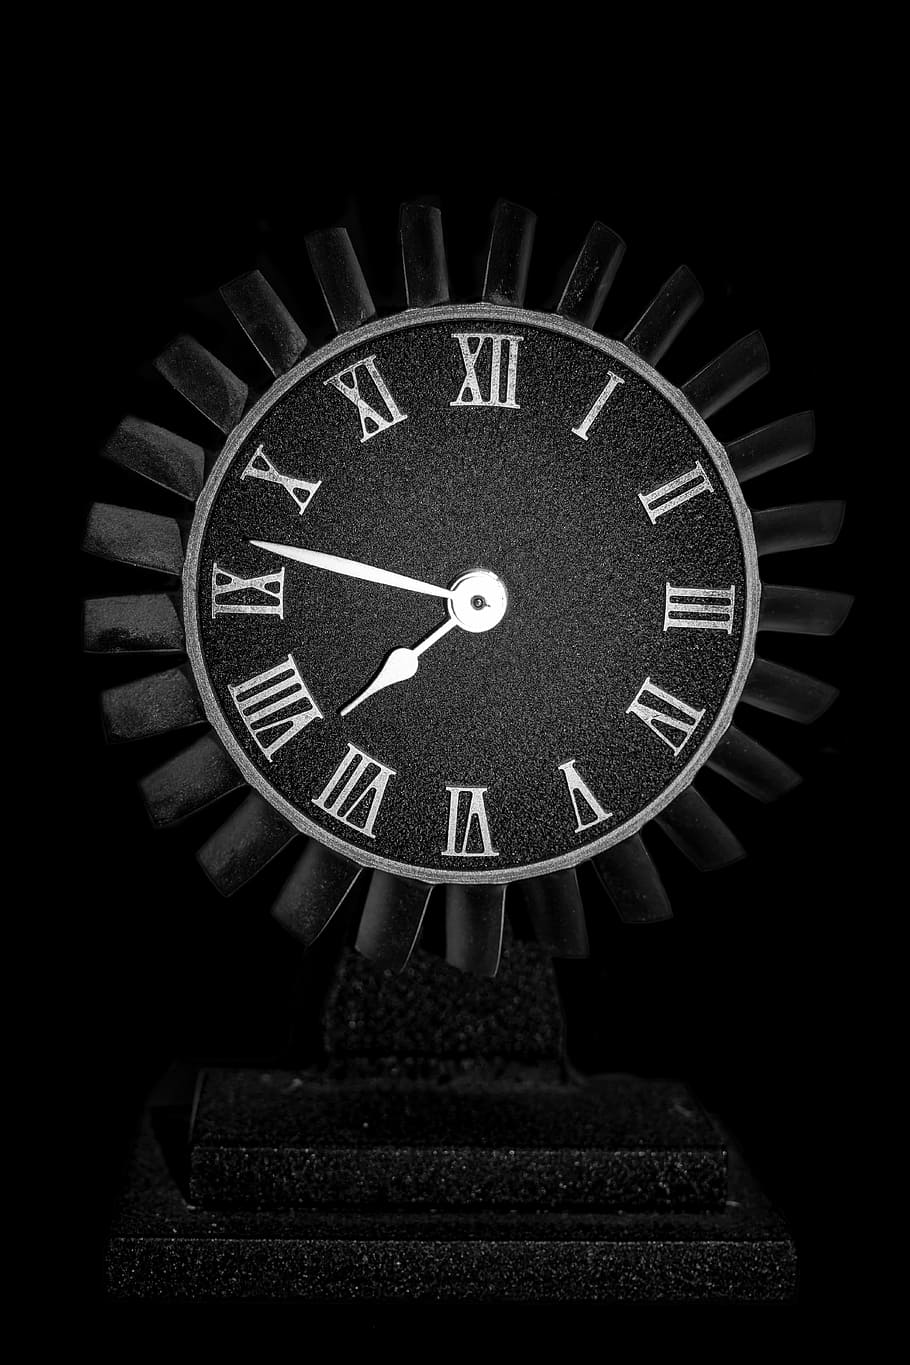 black, white, analog clock reading, 7:47, clock, engine, old, aircraft, metal, hard